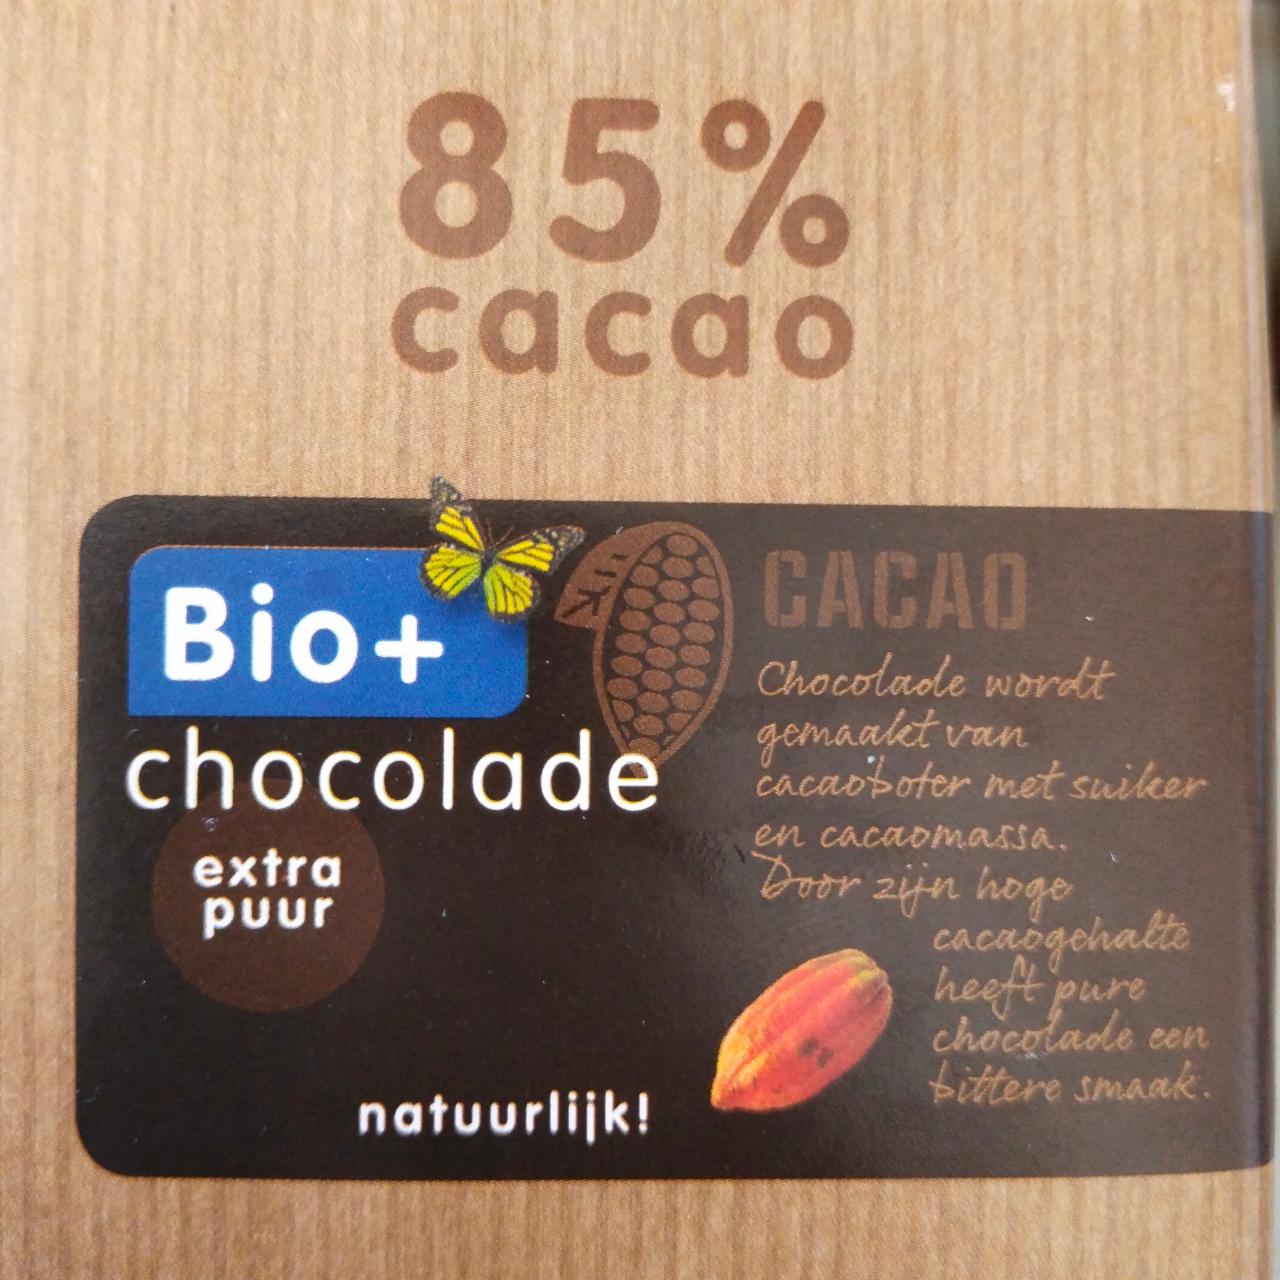 Фото - шоколад 85% какао Bio+